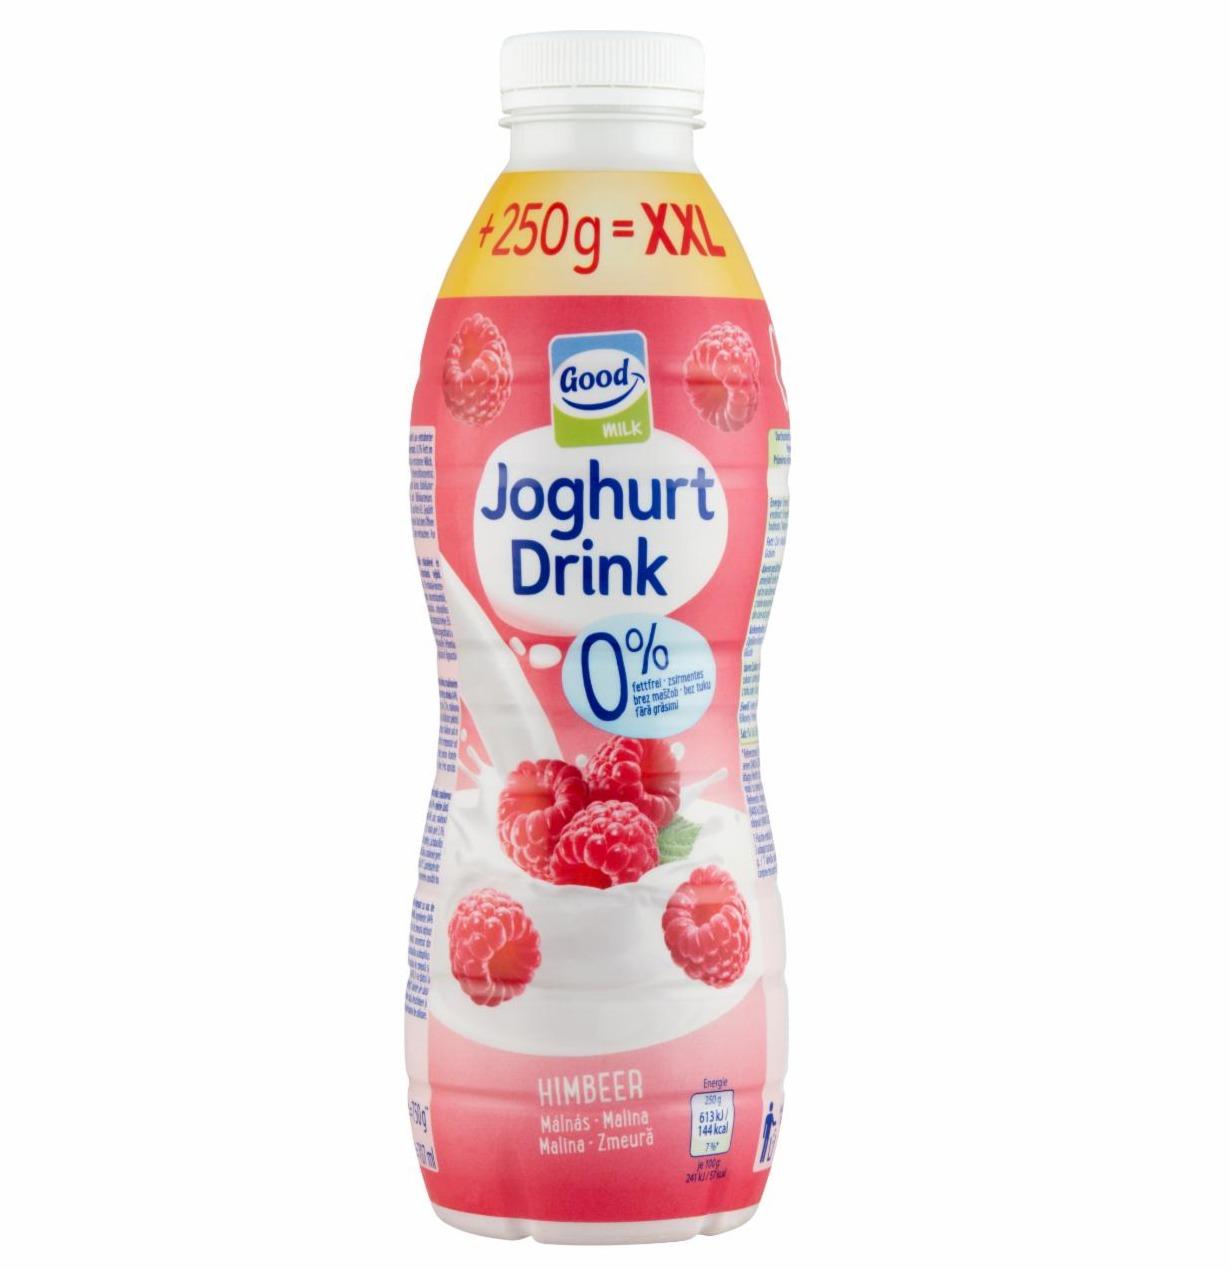 Fotografie - Raspberry Joghurt Drink 0% Good Milk